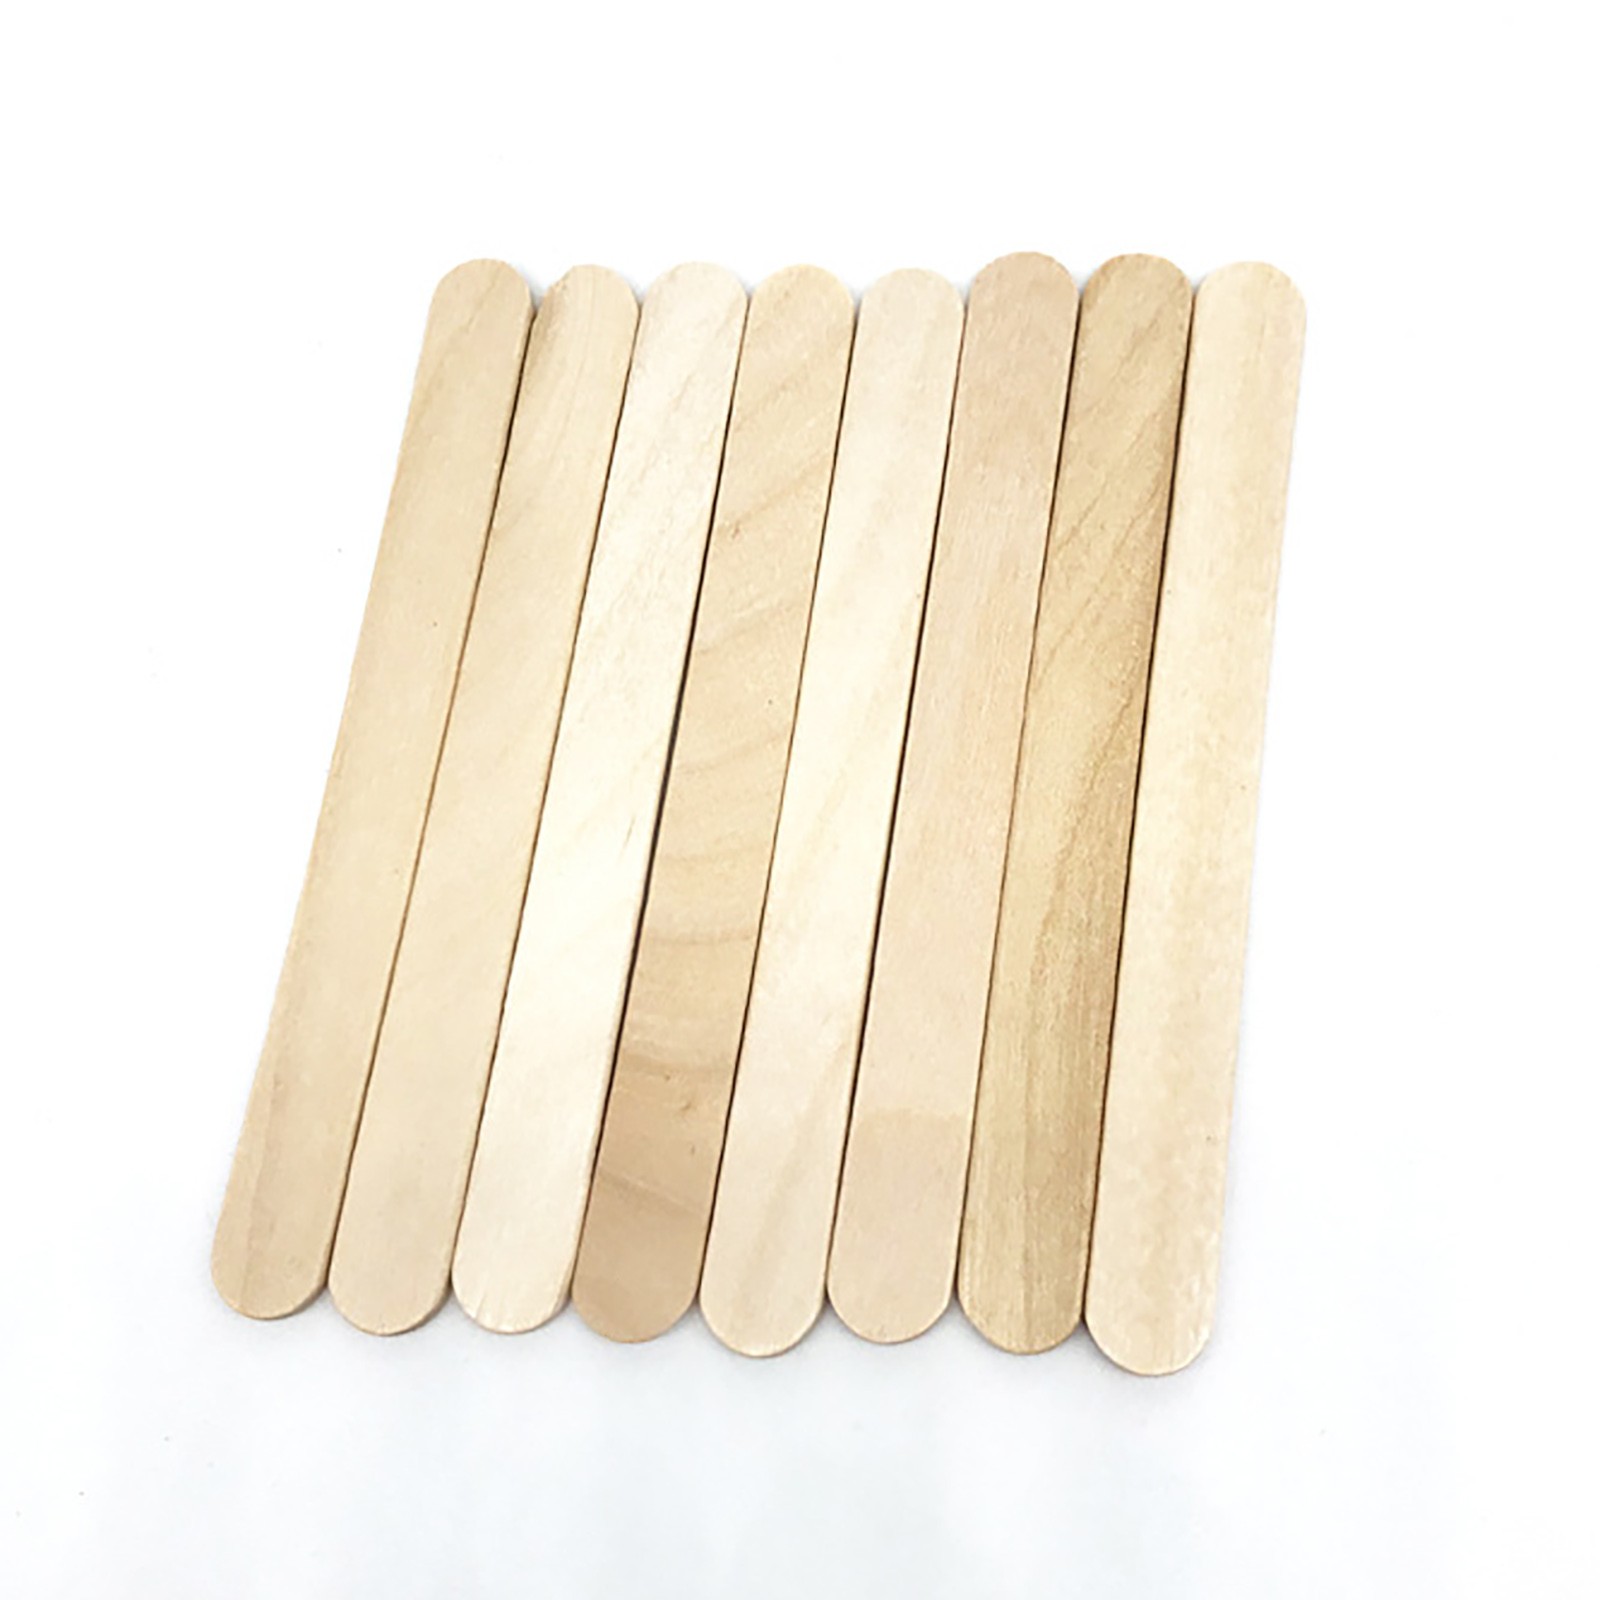 JPLZi Package 3.62” Popsicle Stick Set Multipurpose Wooden Sticks